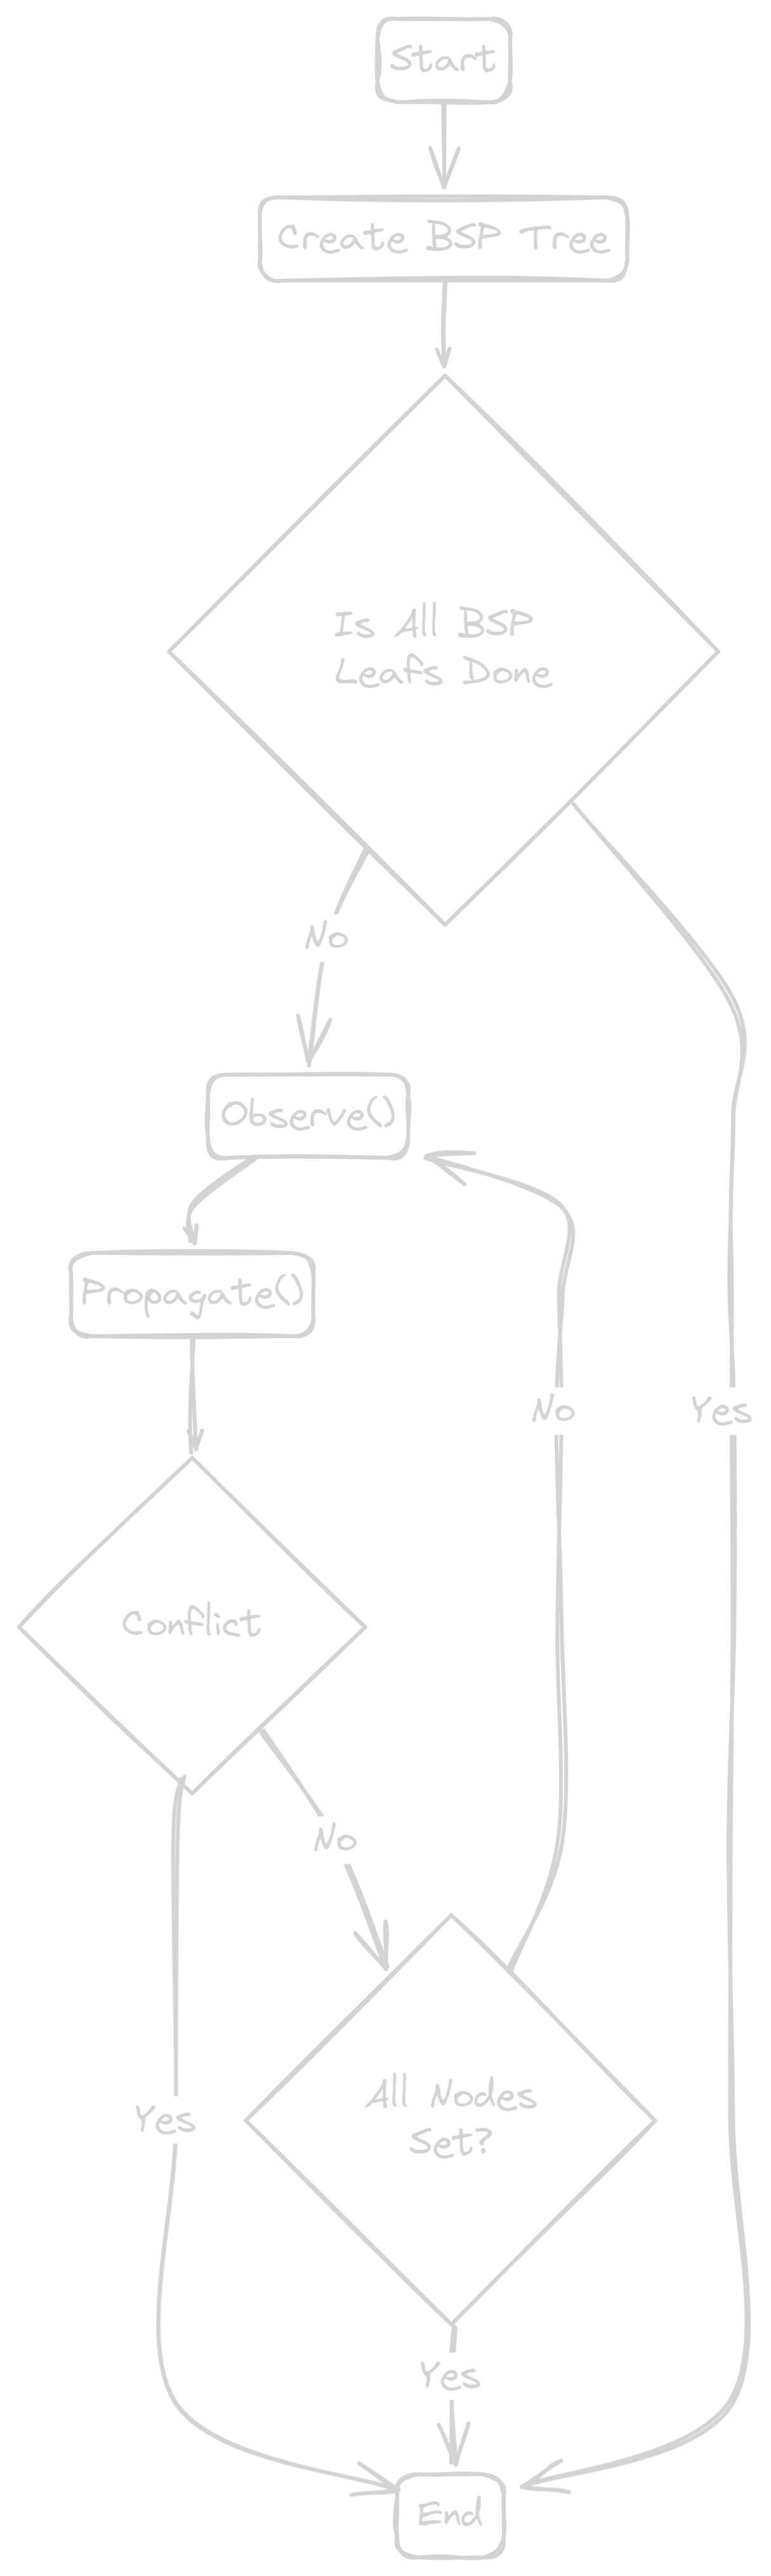 Proposed Diagram Flowchart